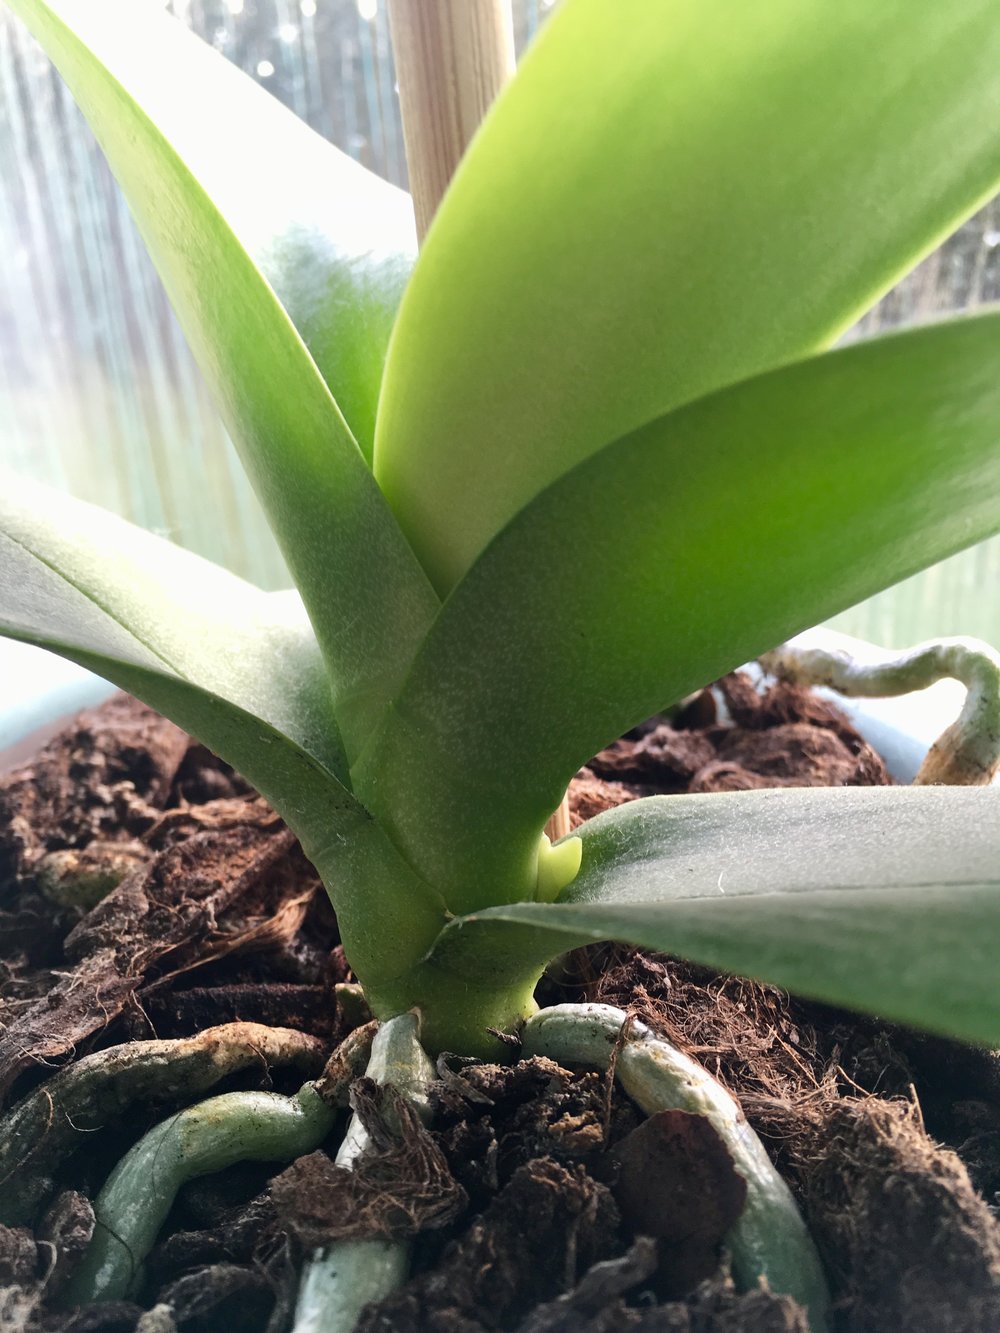 Orchid flower stem